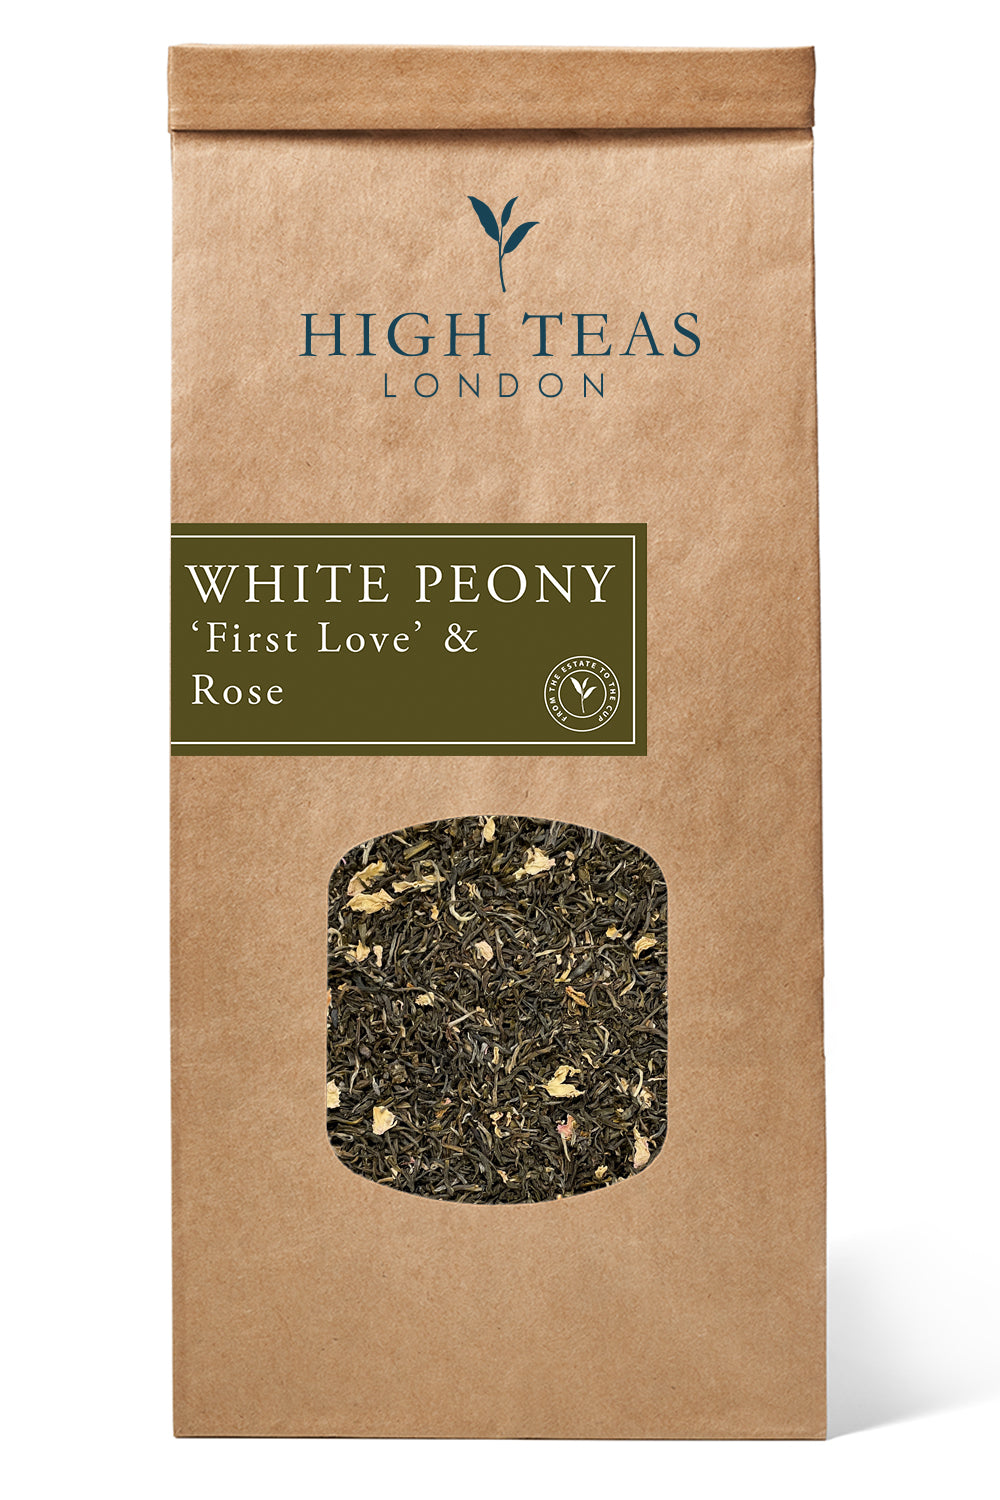 White Peony with Rose Petals aka First Love-250g-Loose Leaf Tea-High Teas